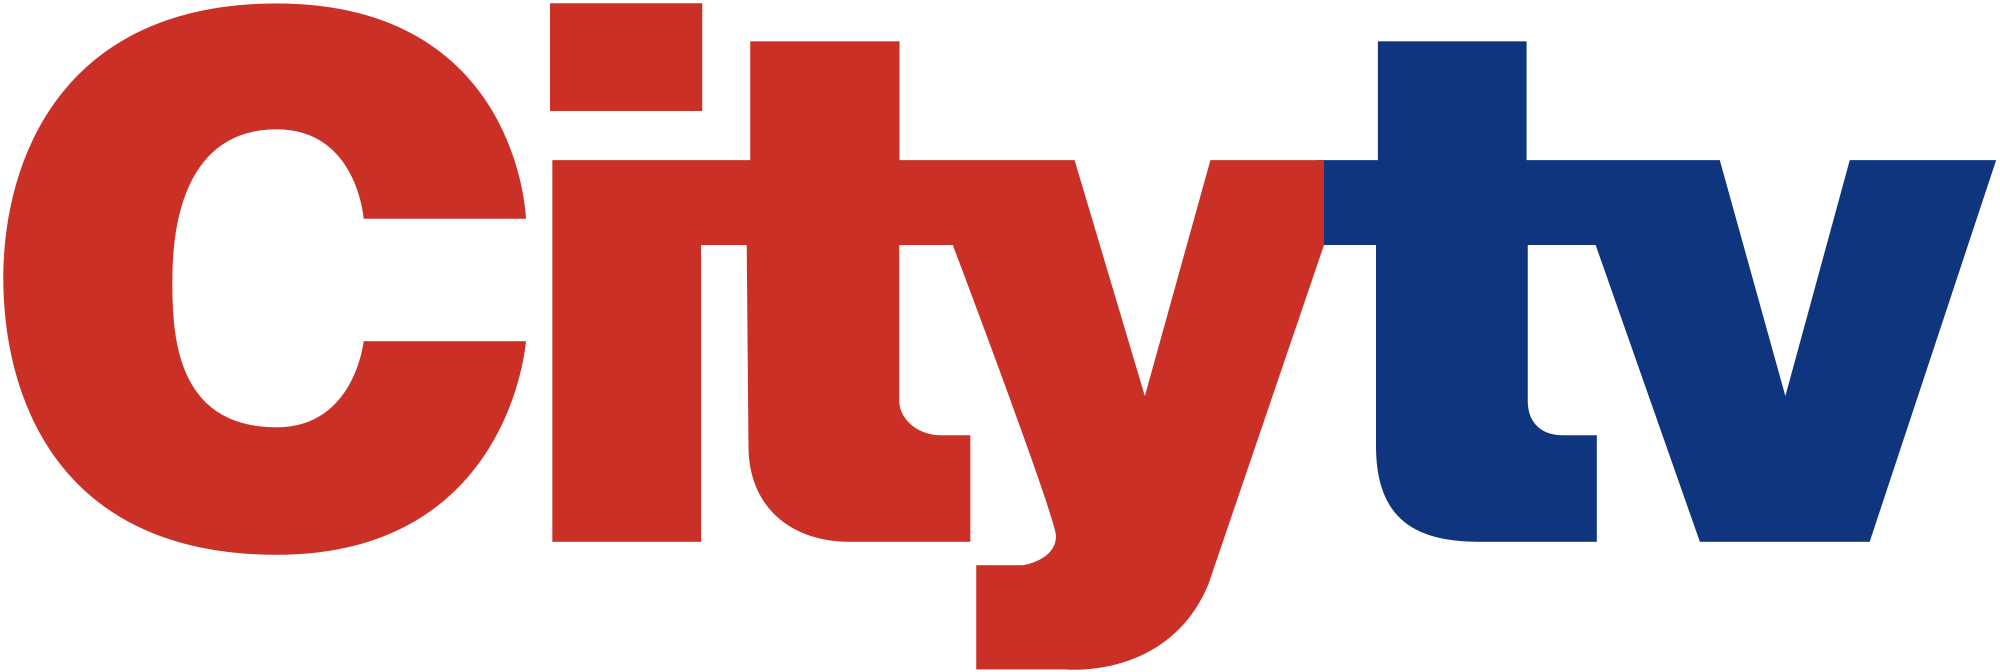 Open - City Tv Canada Logo Clipart (2000x672), Png Download